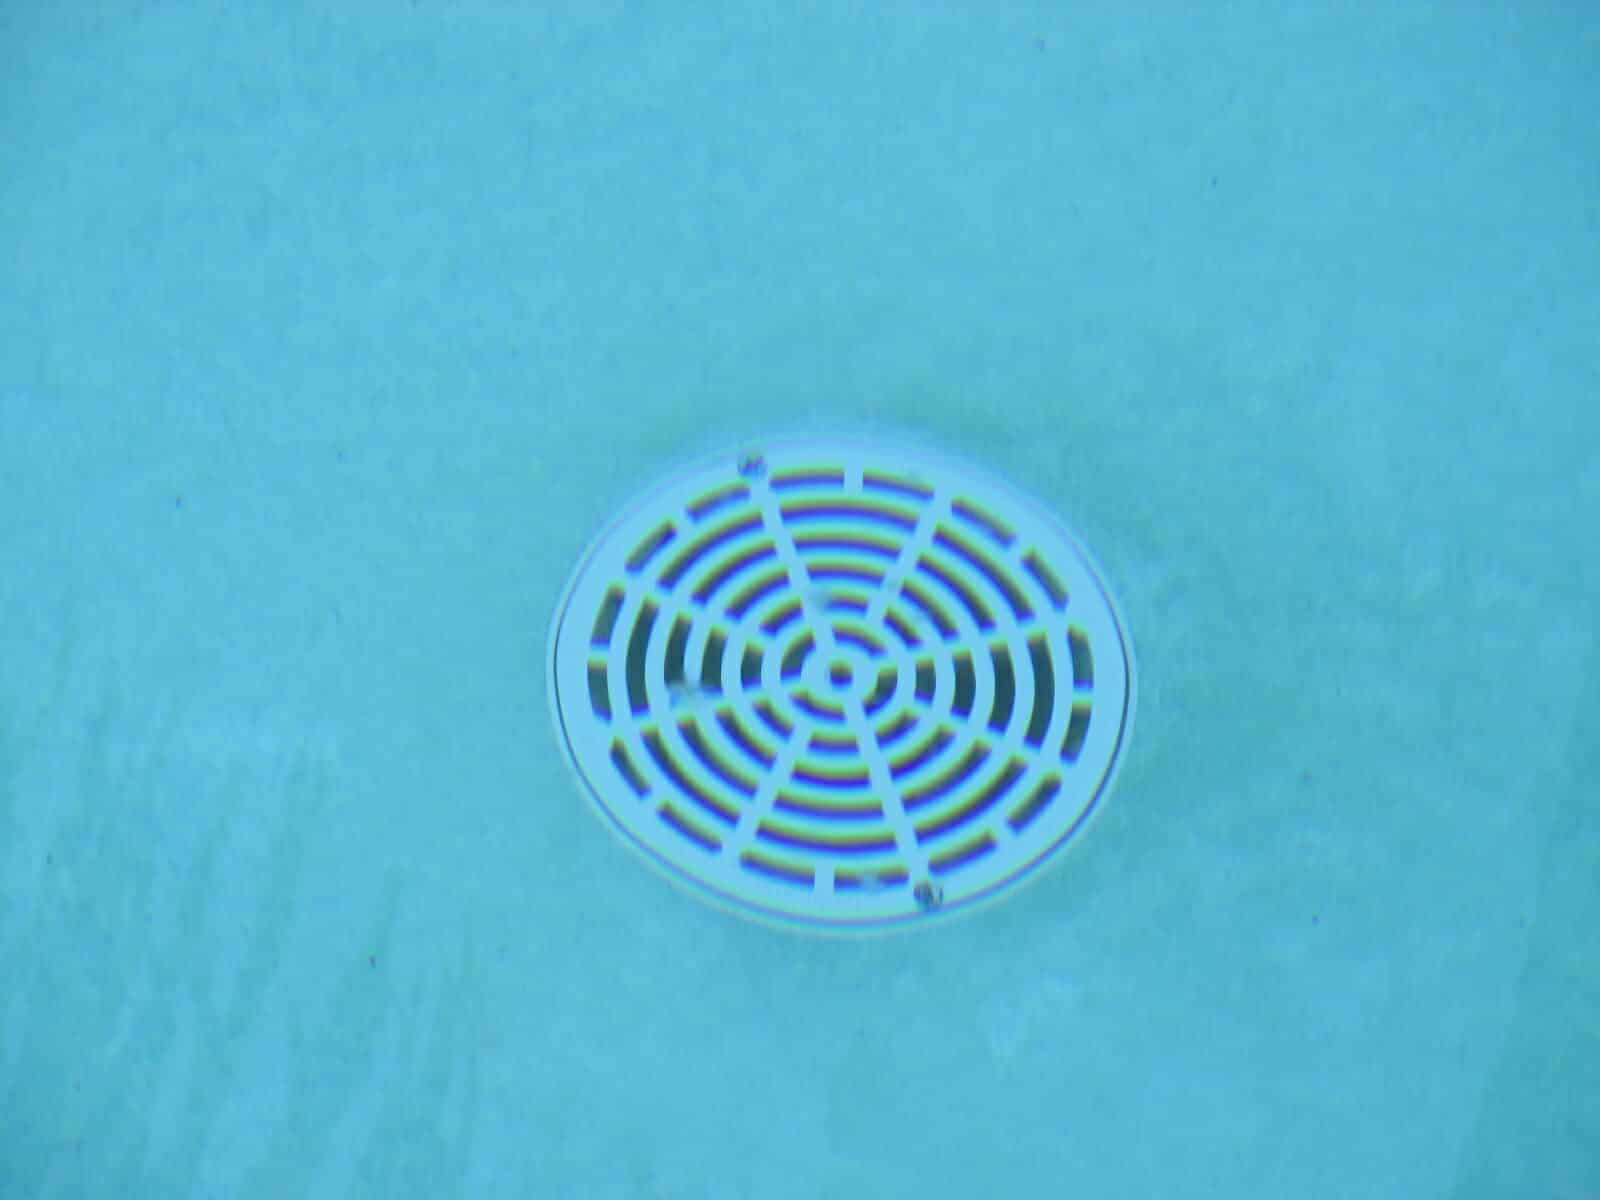 Unsafe swimming pool drain